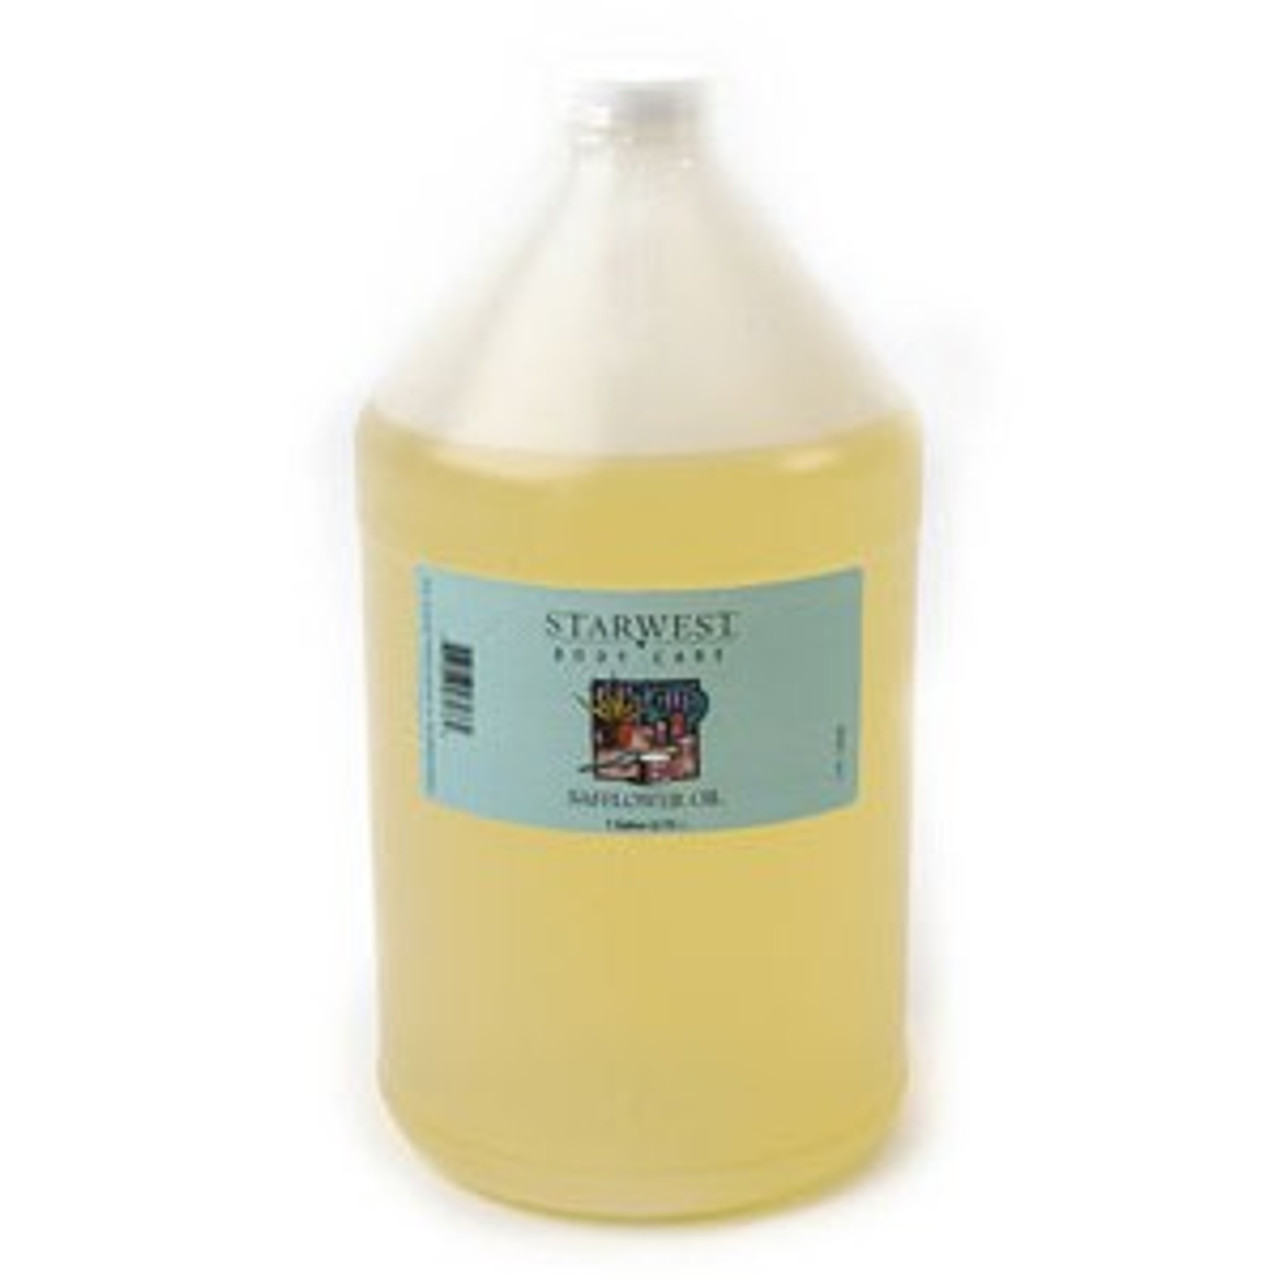 Safflower Oil - Refined - High OLEIC